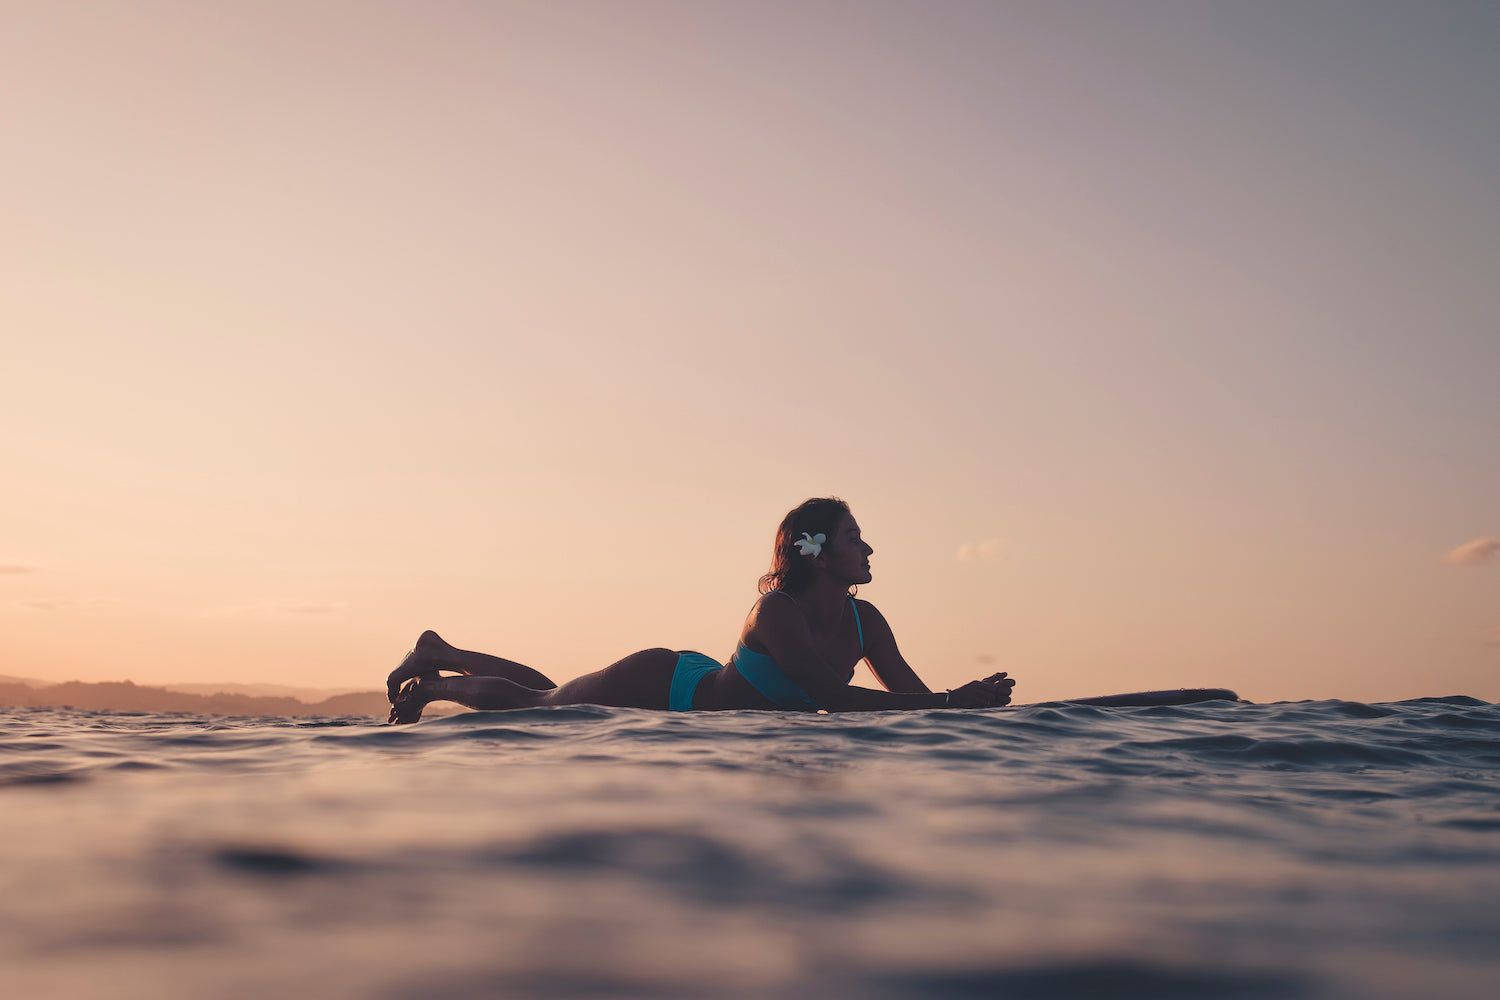 Marie Moana surfing at sunset wearing Dkoko sustainable surf bikinis